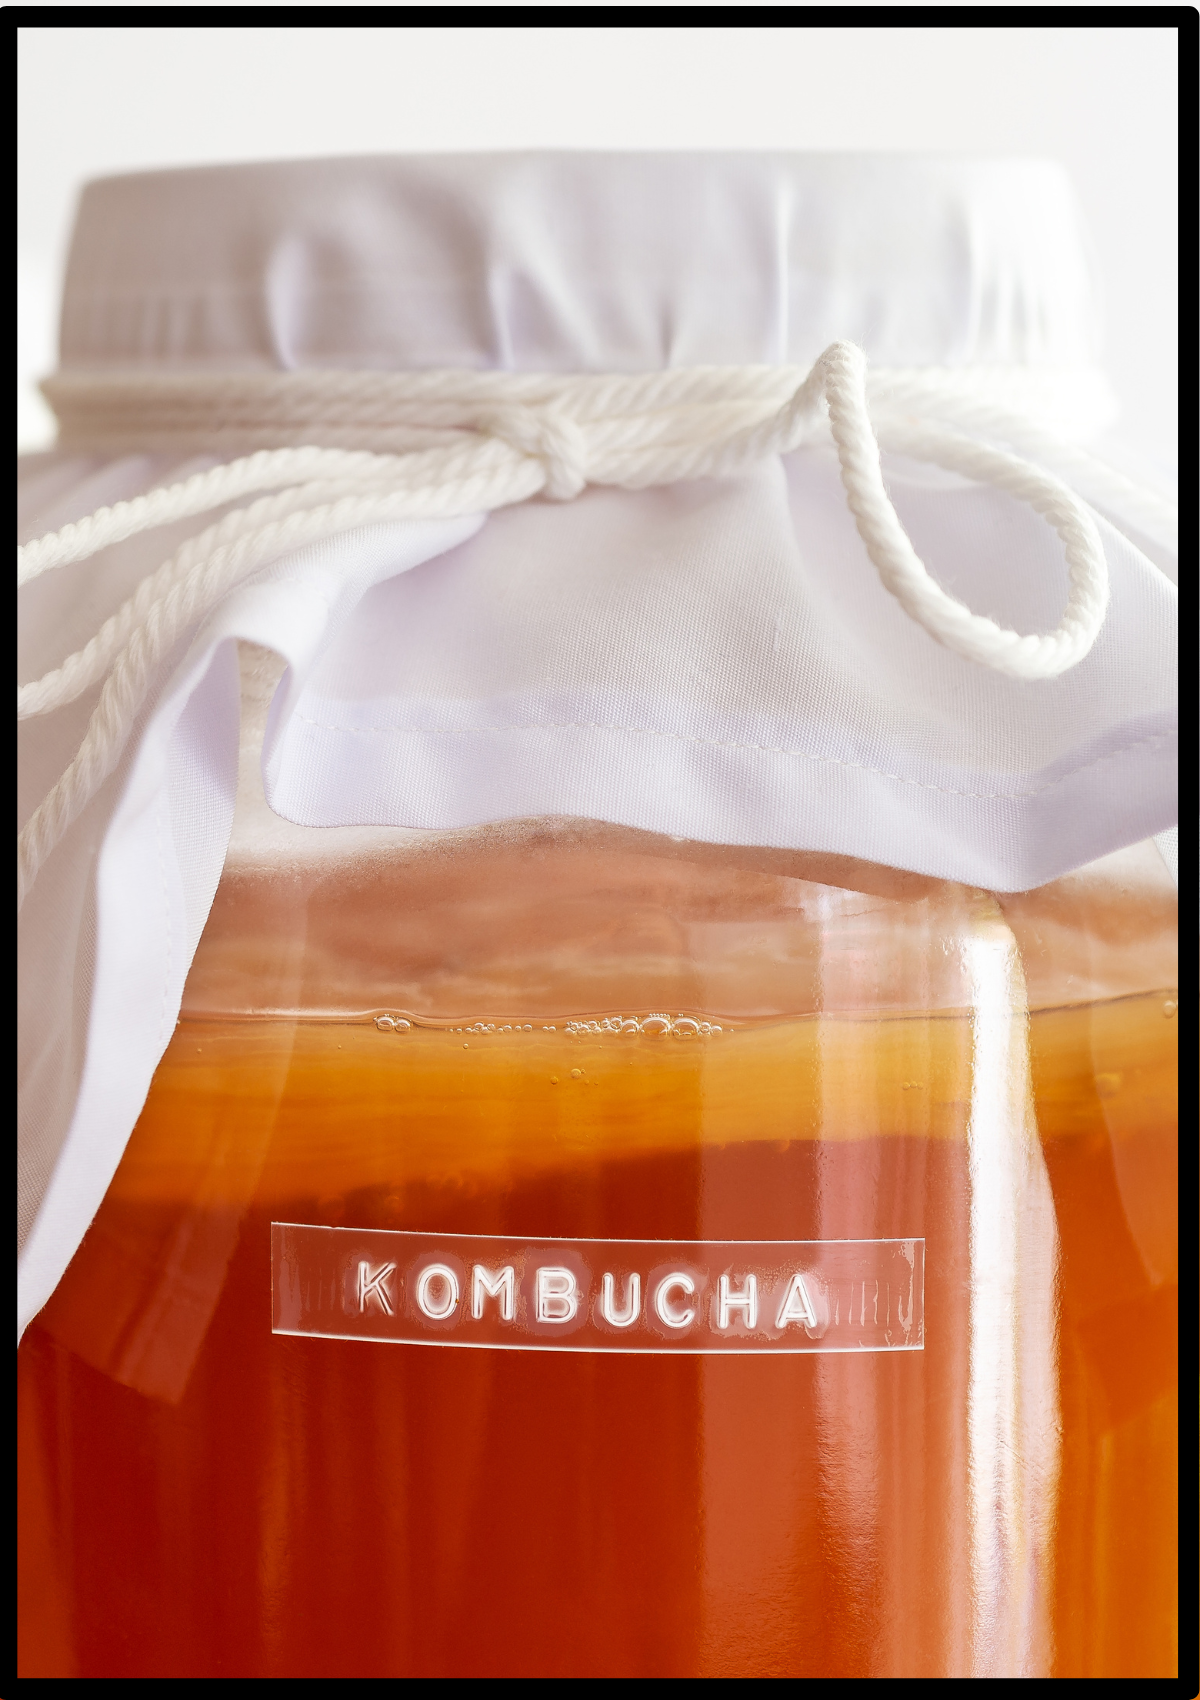 A jar of kombucha.